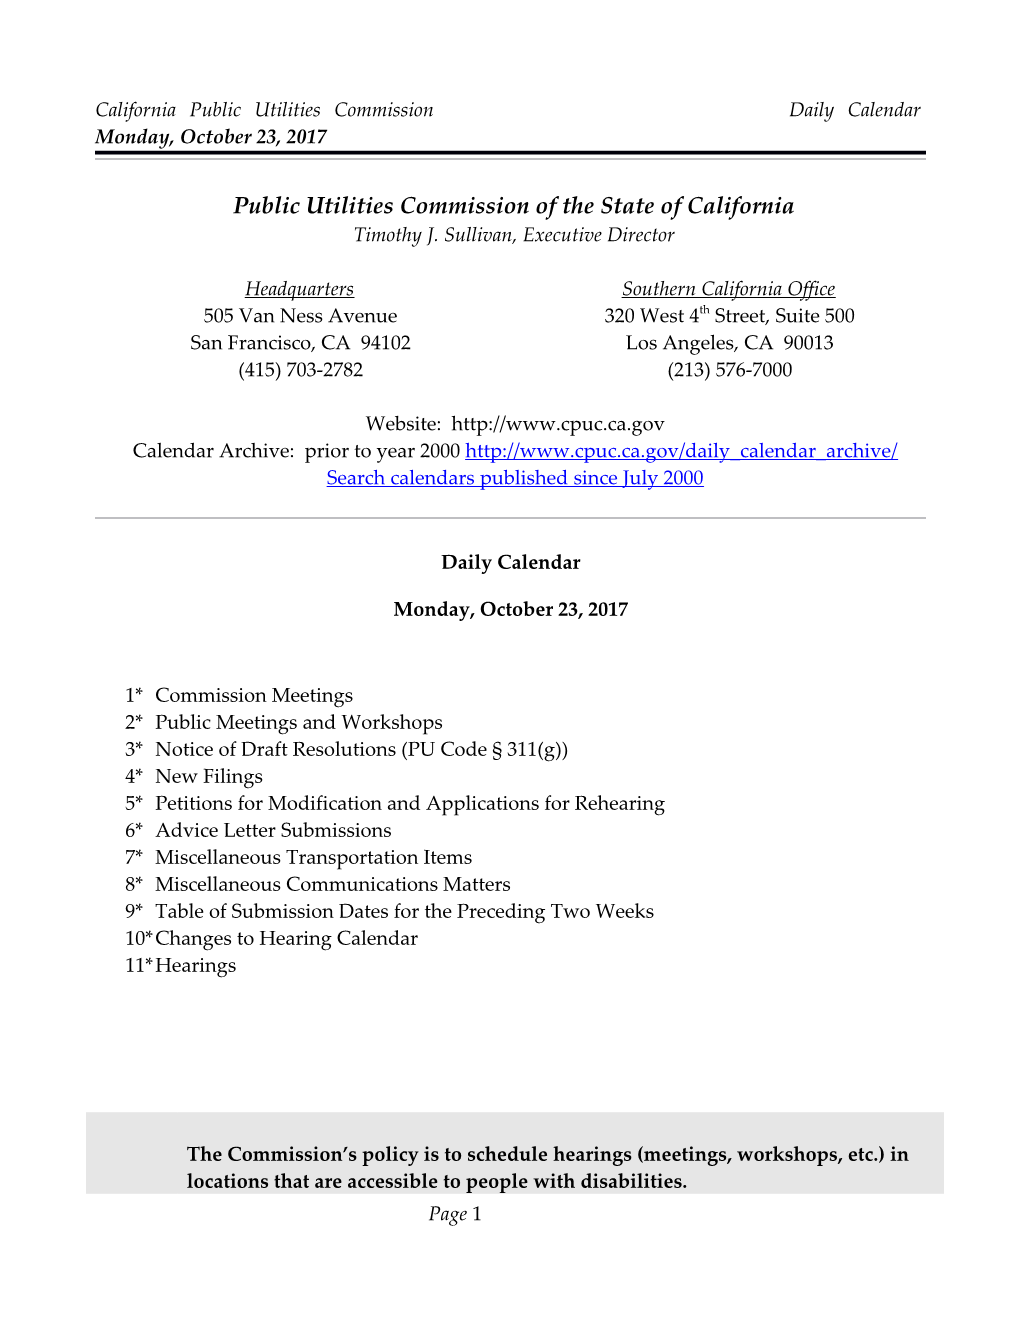 California Public Utilities Commission Daily Calendar Monday, October 23, 2017